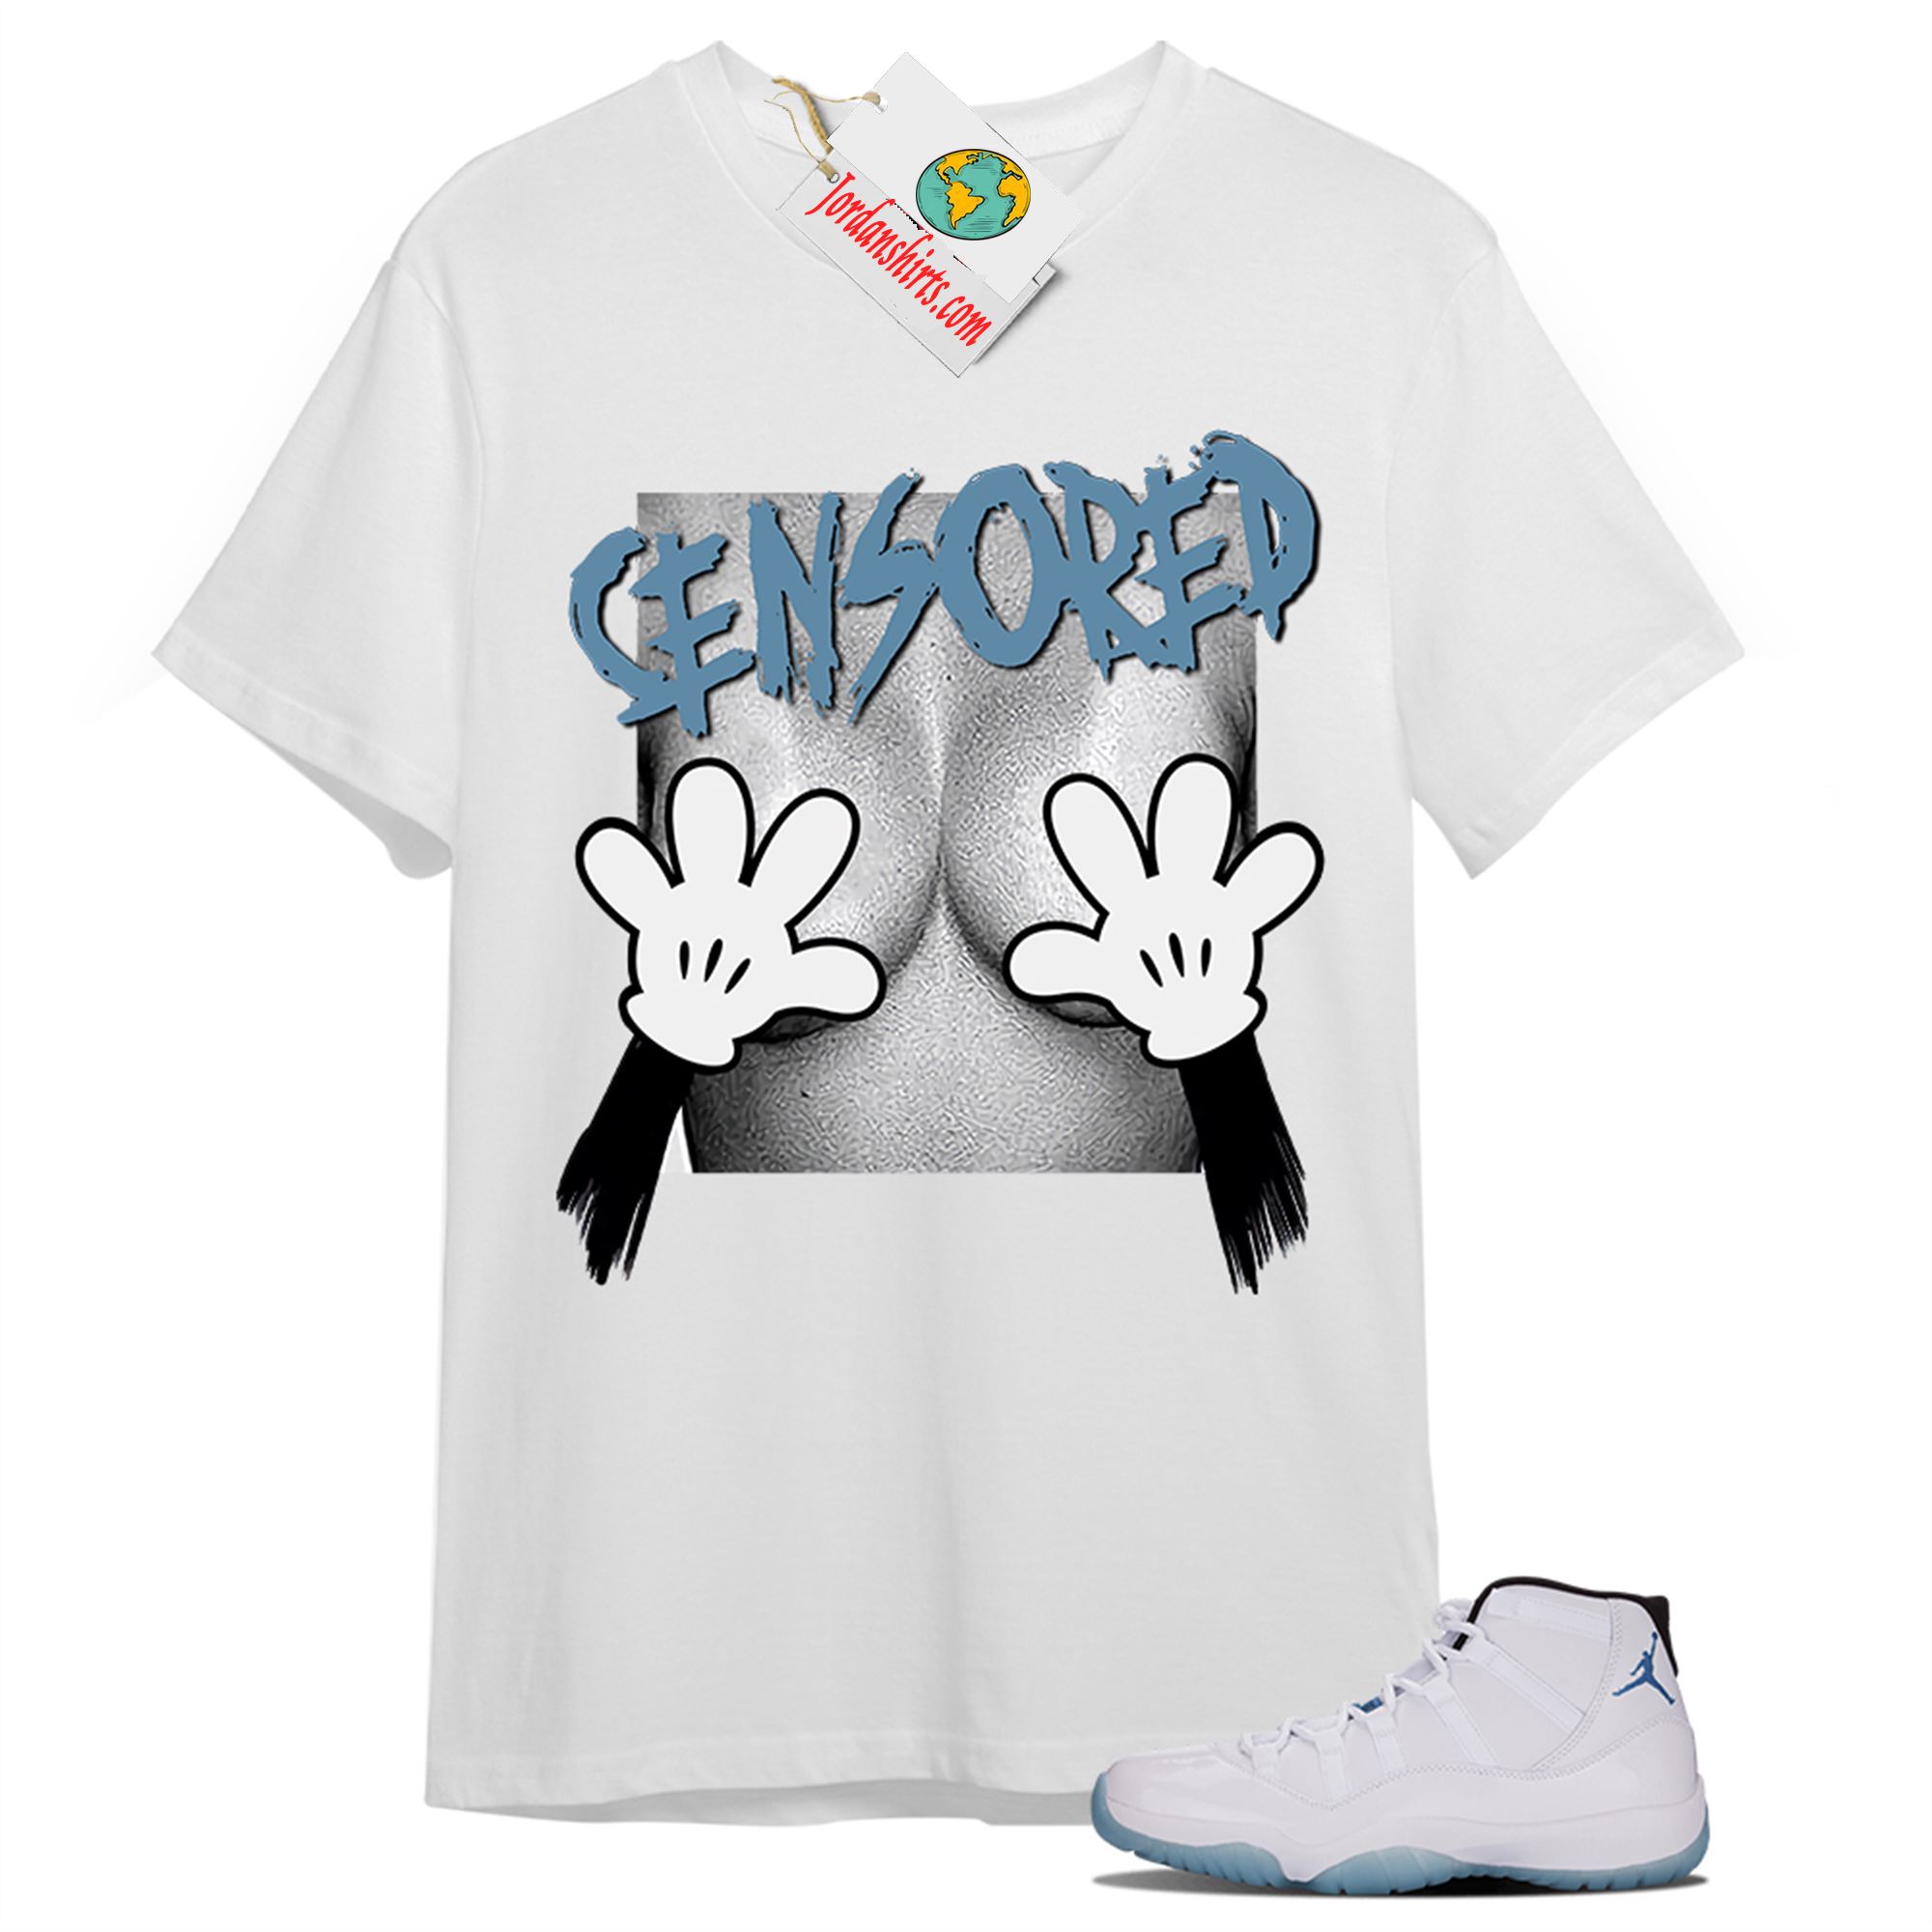 Jordan 11 Shirt, Mickey Boobs Censored White T-shirt Air Jordan 11 Legend Blue 11s Size Up To 5xl